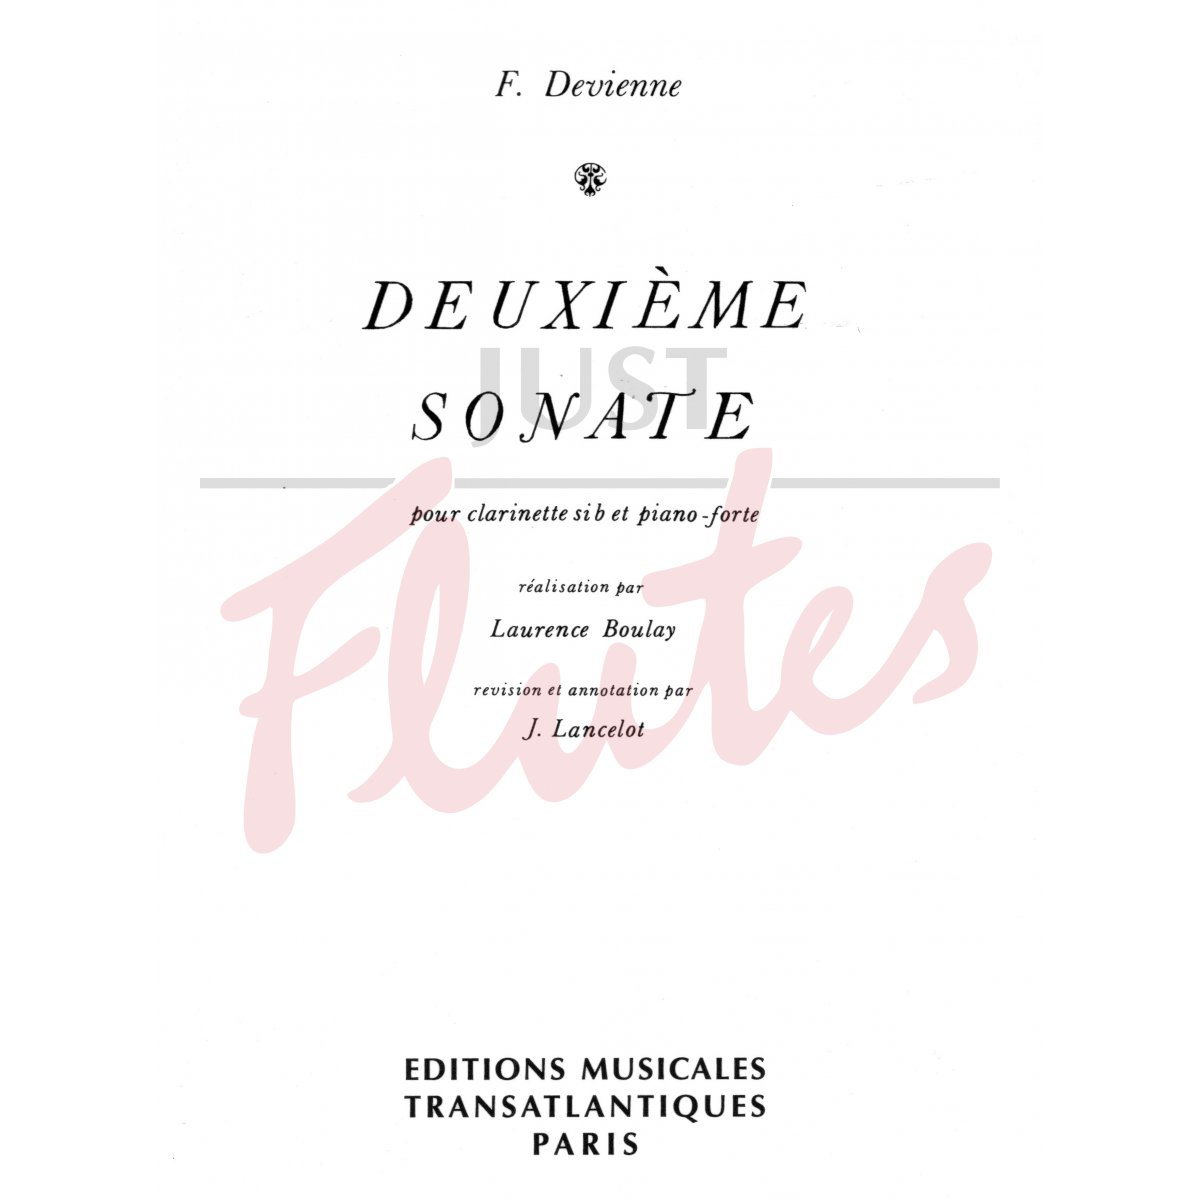 Sonata No 2 for Bb Clarinet and Piano